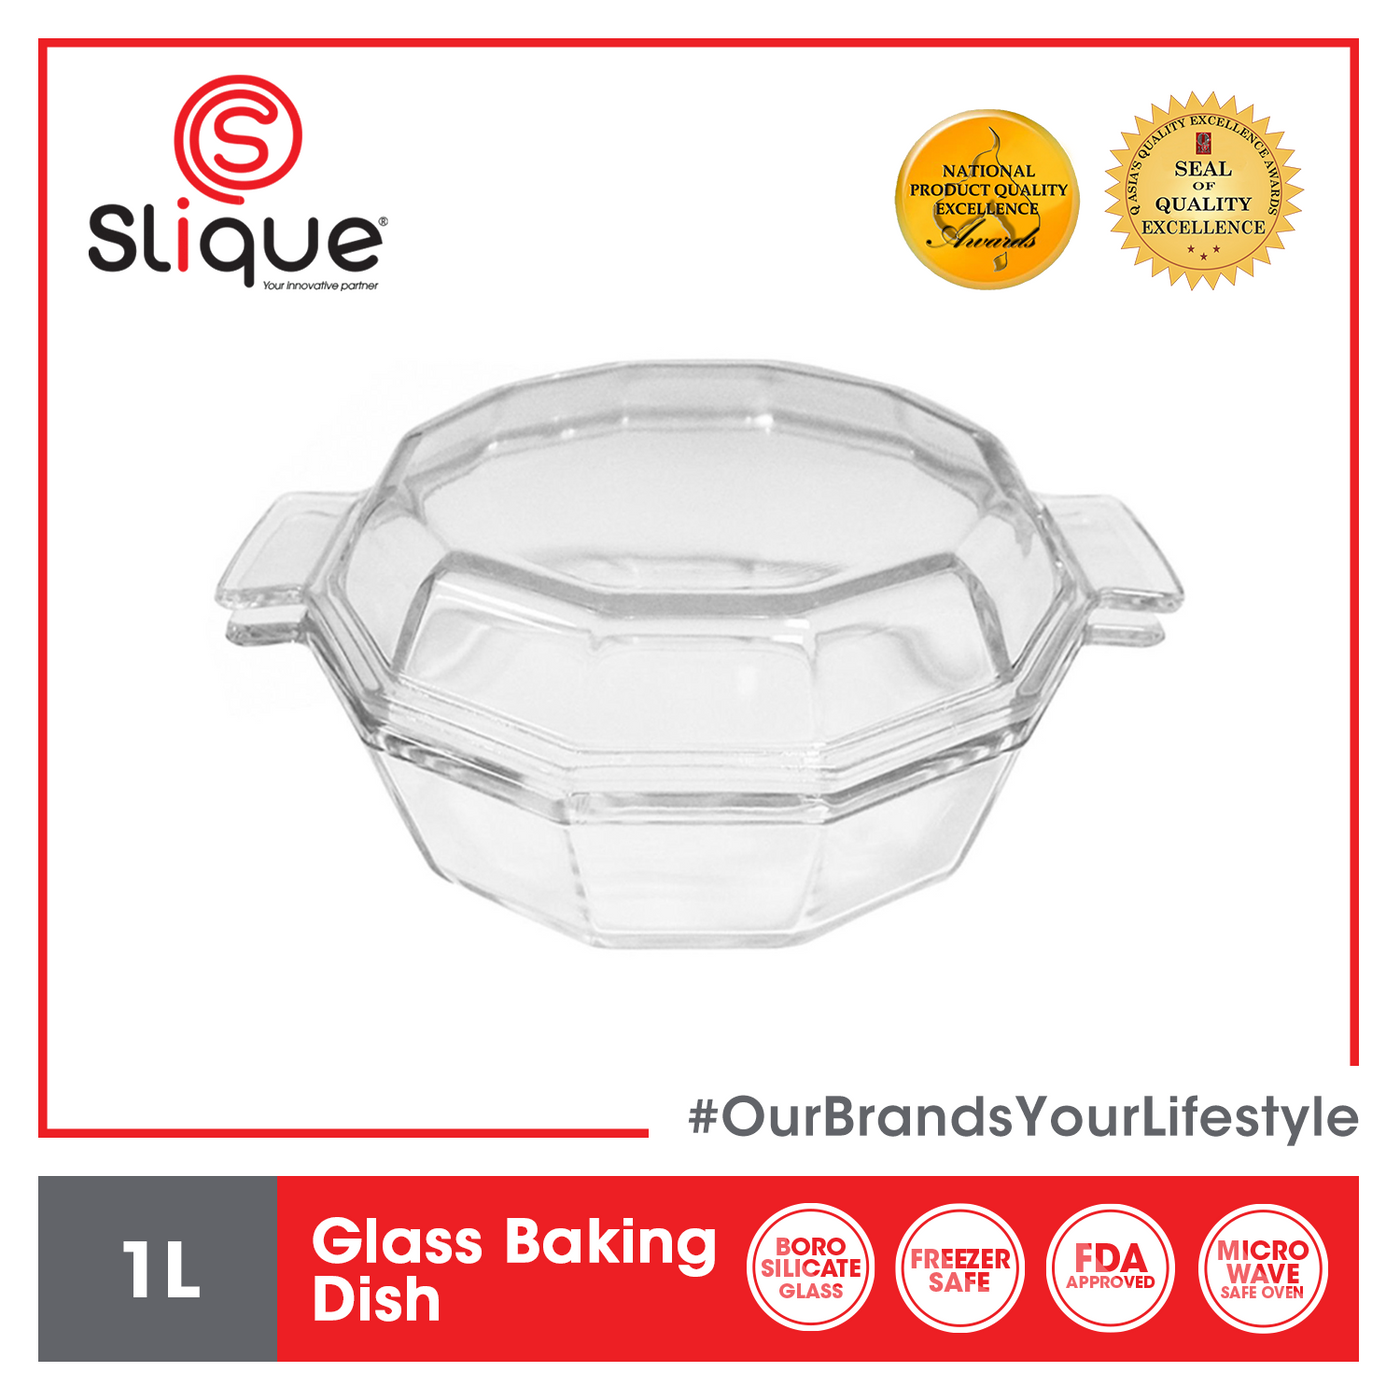 SLIQUE Premium Borosilicate Hexagon Glass Baking Dish Microwave & Oven Safe Baking Essentials 1000ml